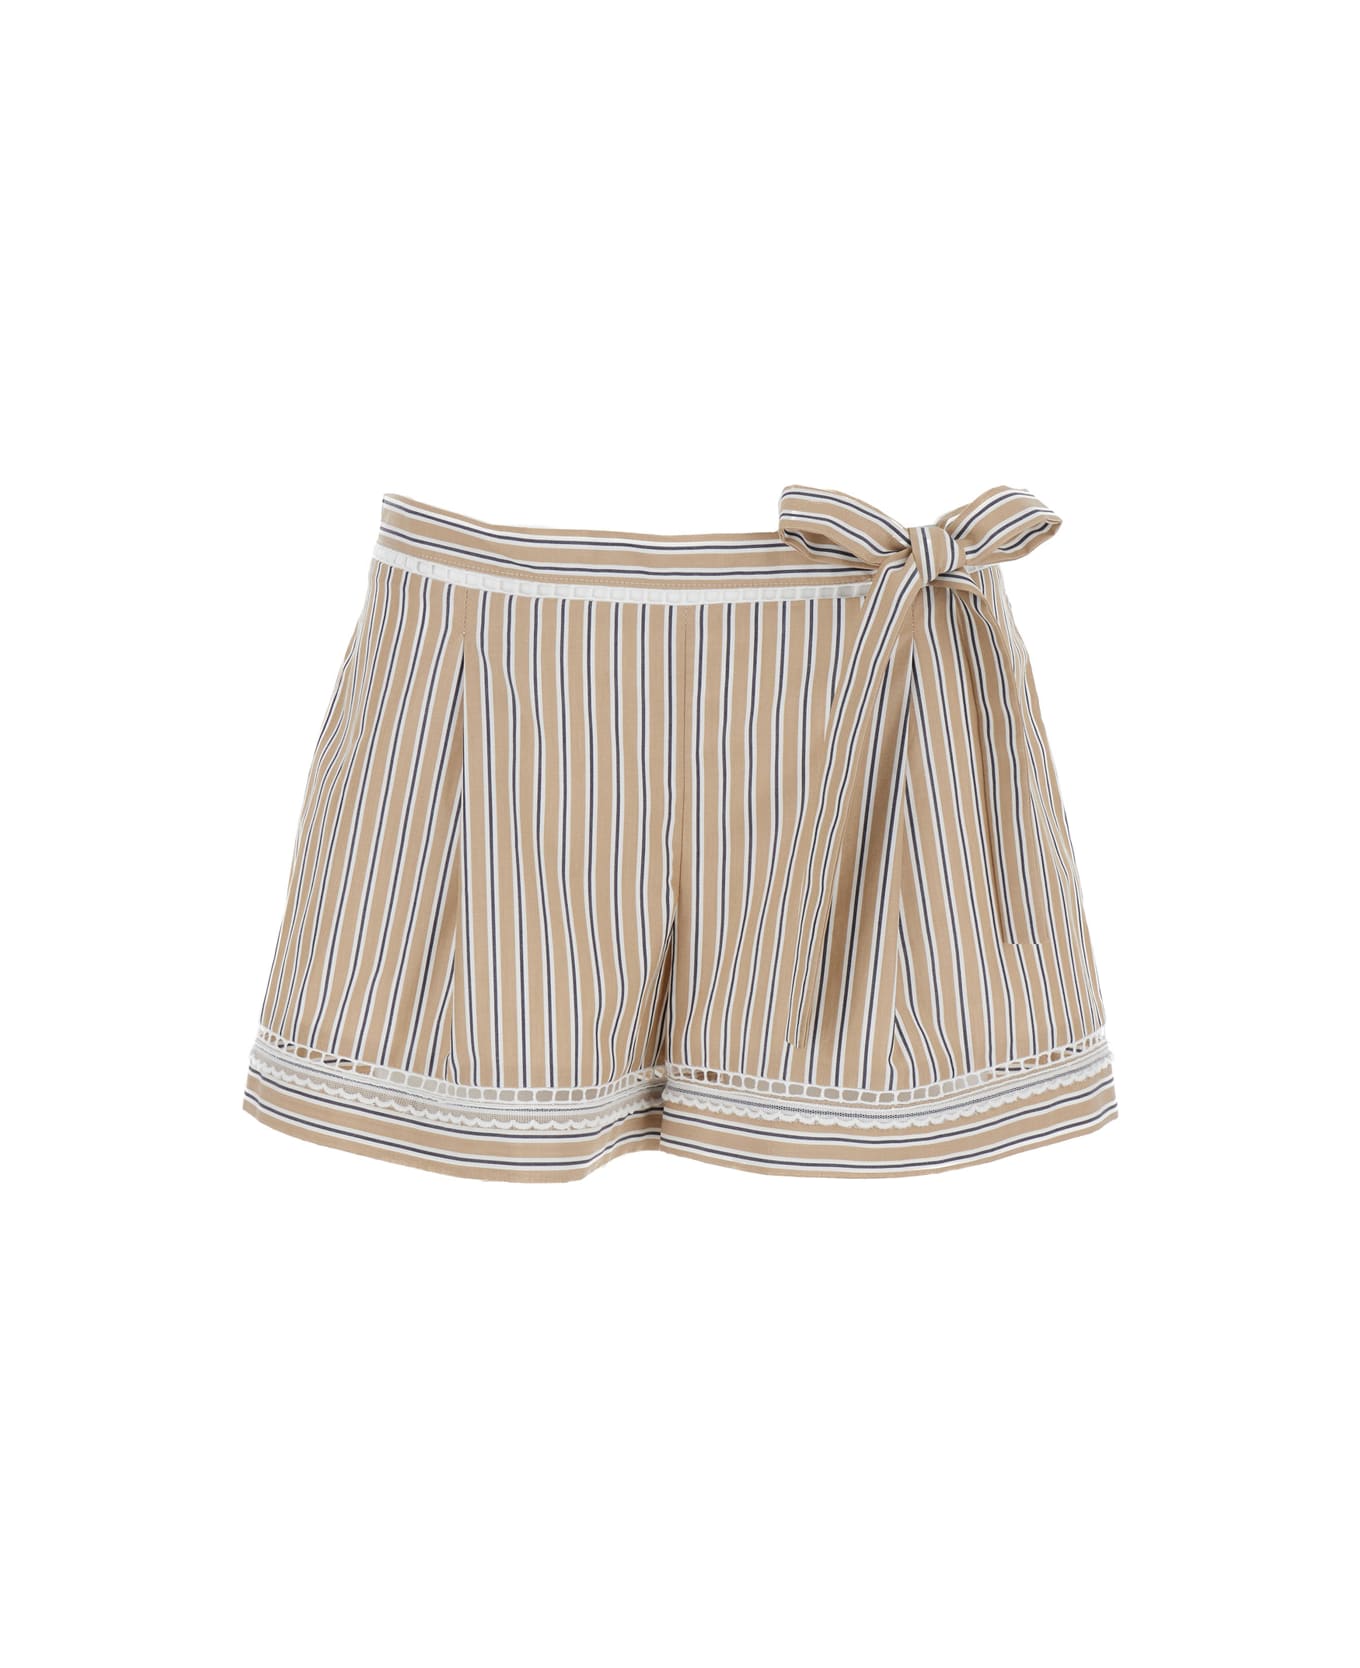 Alberta Ferretti Beige Striped Shorts In Cotton Woman - Beige